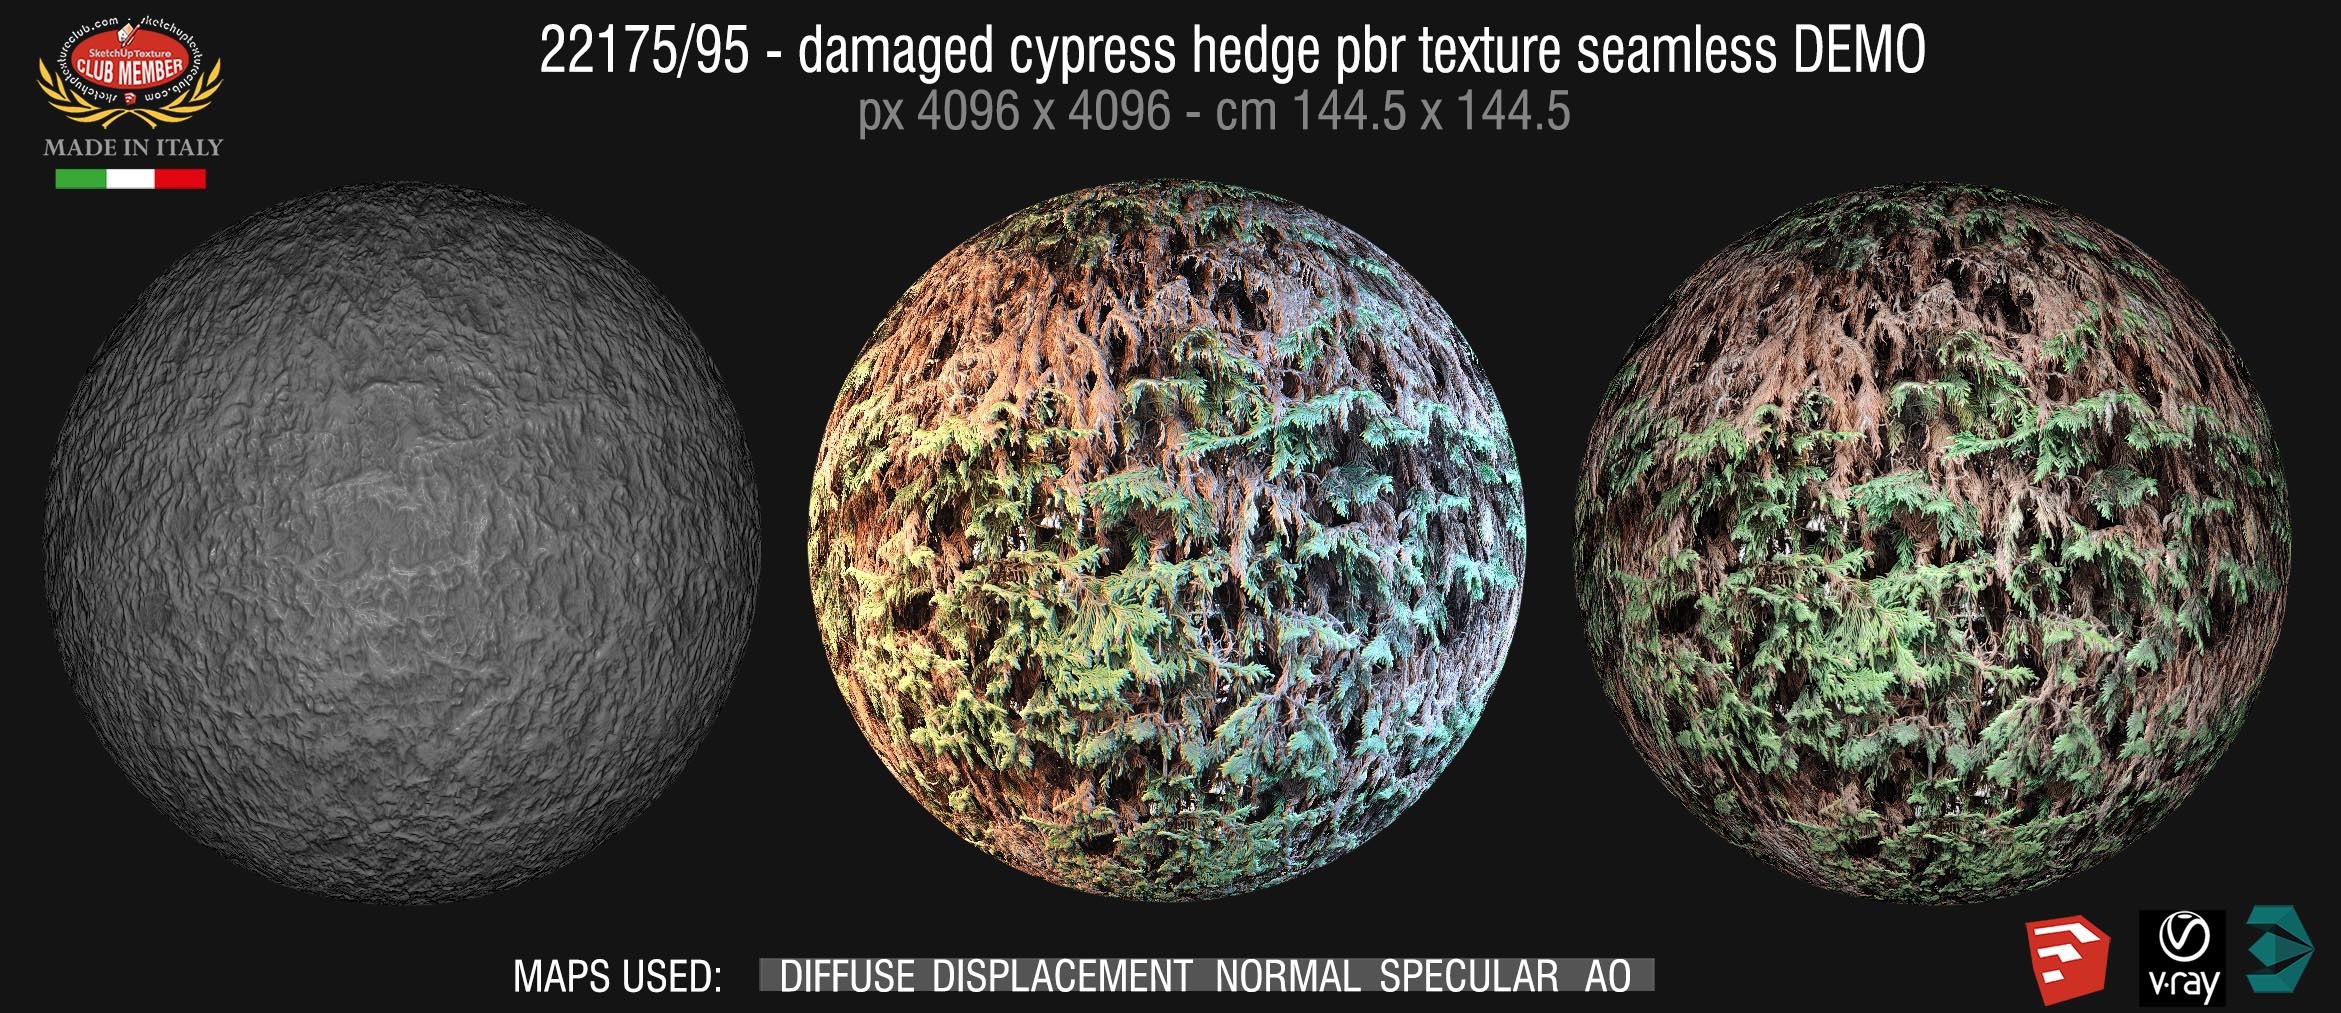 22175/95 damaged cypress hedge PBR texture seamless demo